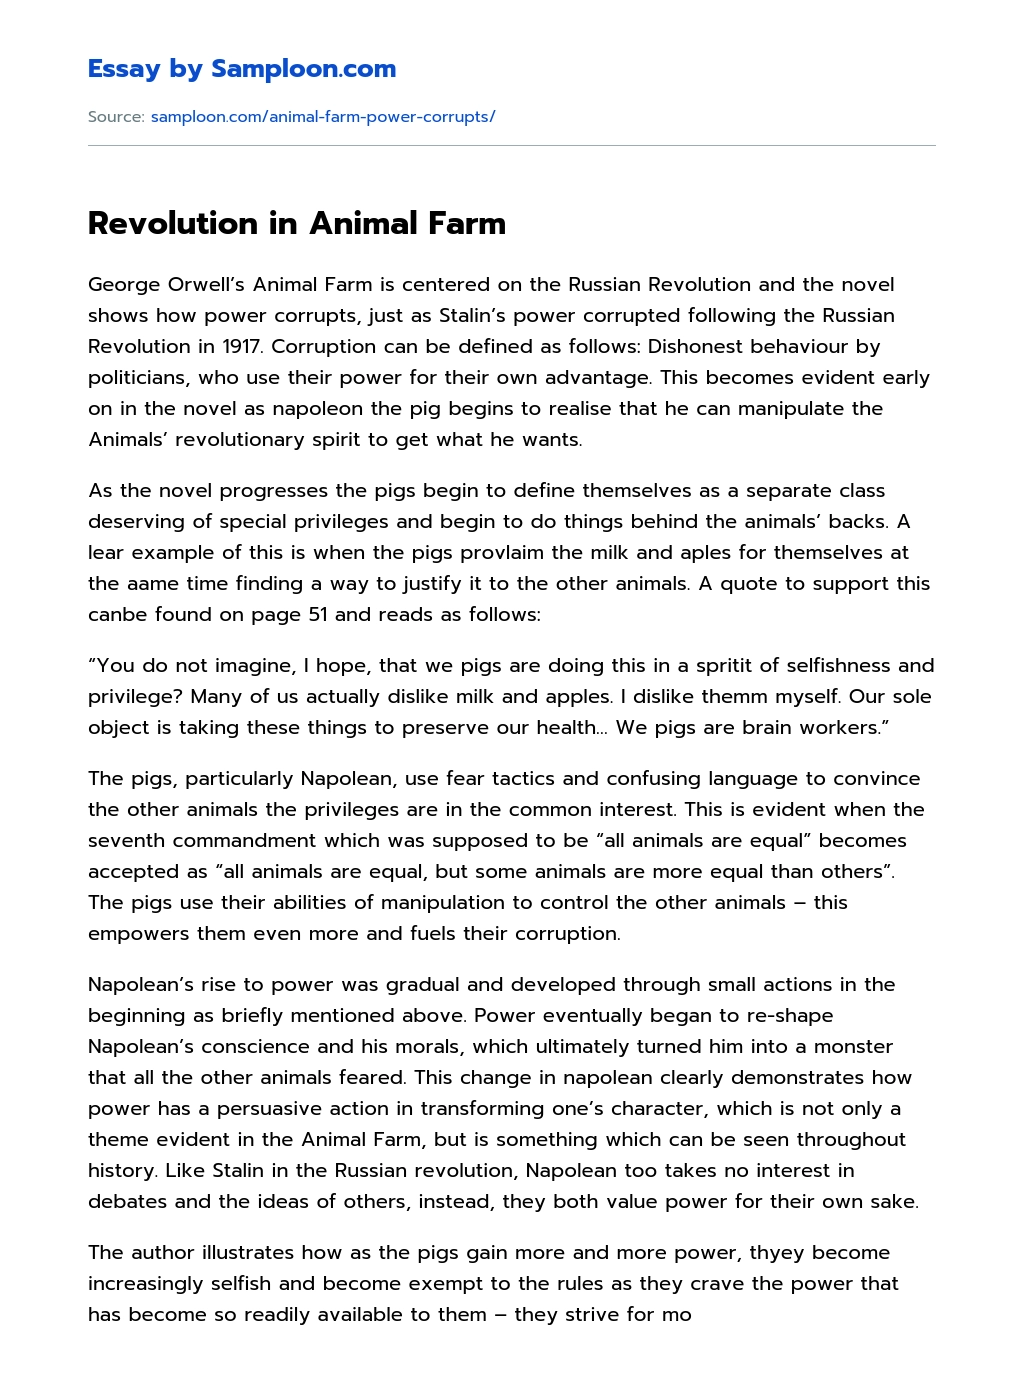 animal farm 7 commandments essay